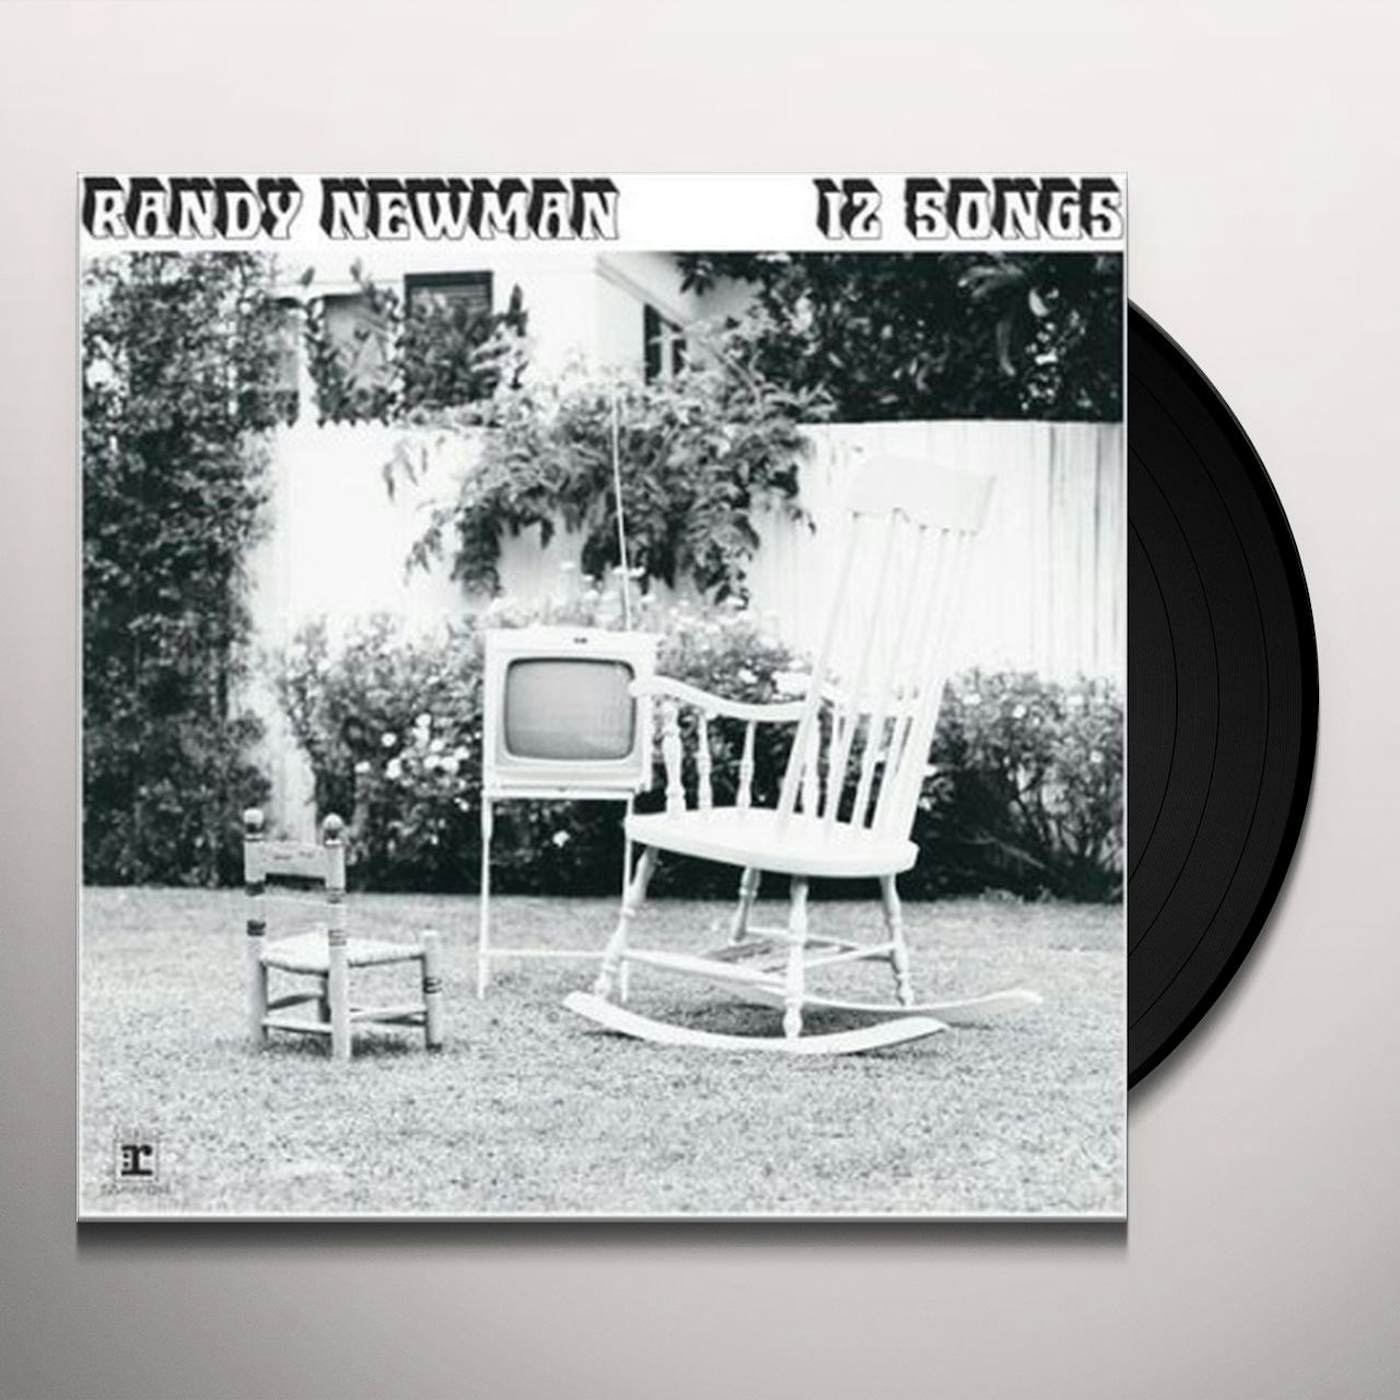 Randy Newman 12 Songs Vinyl Record